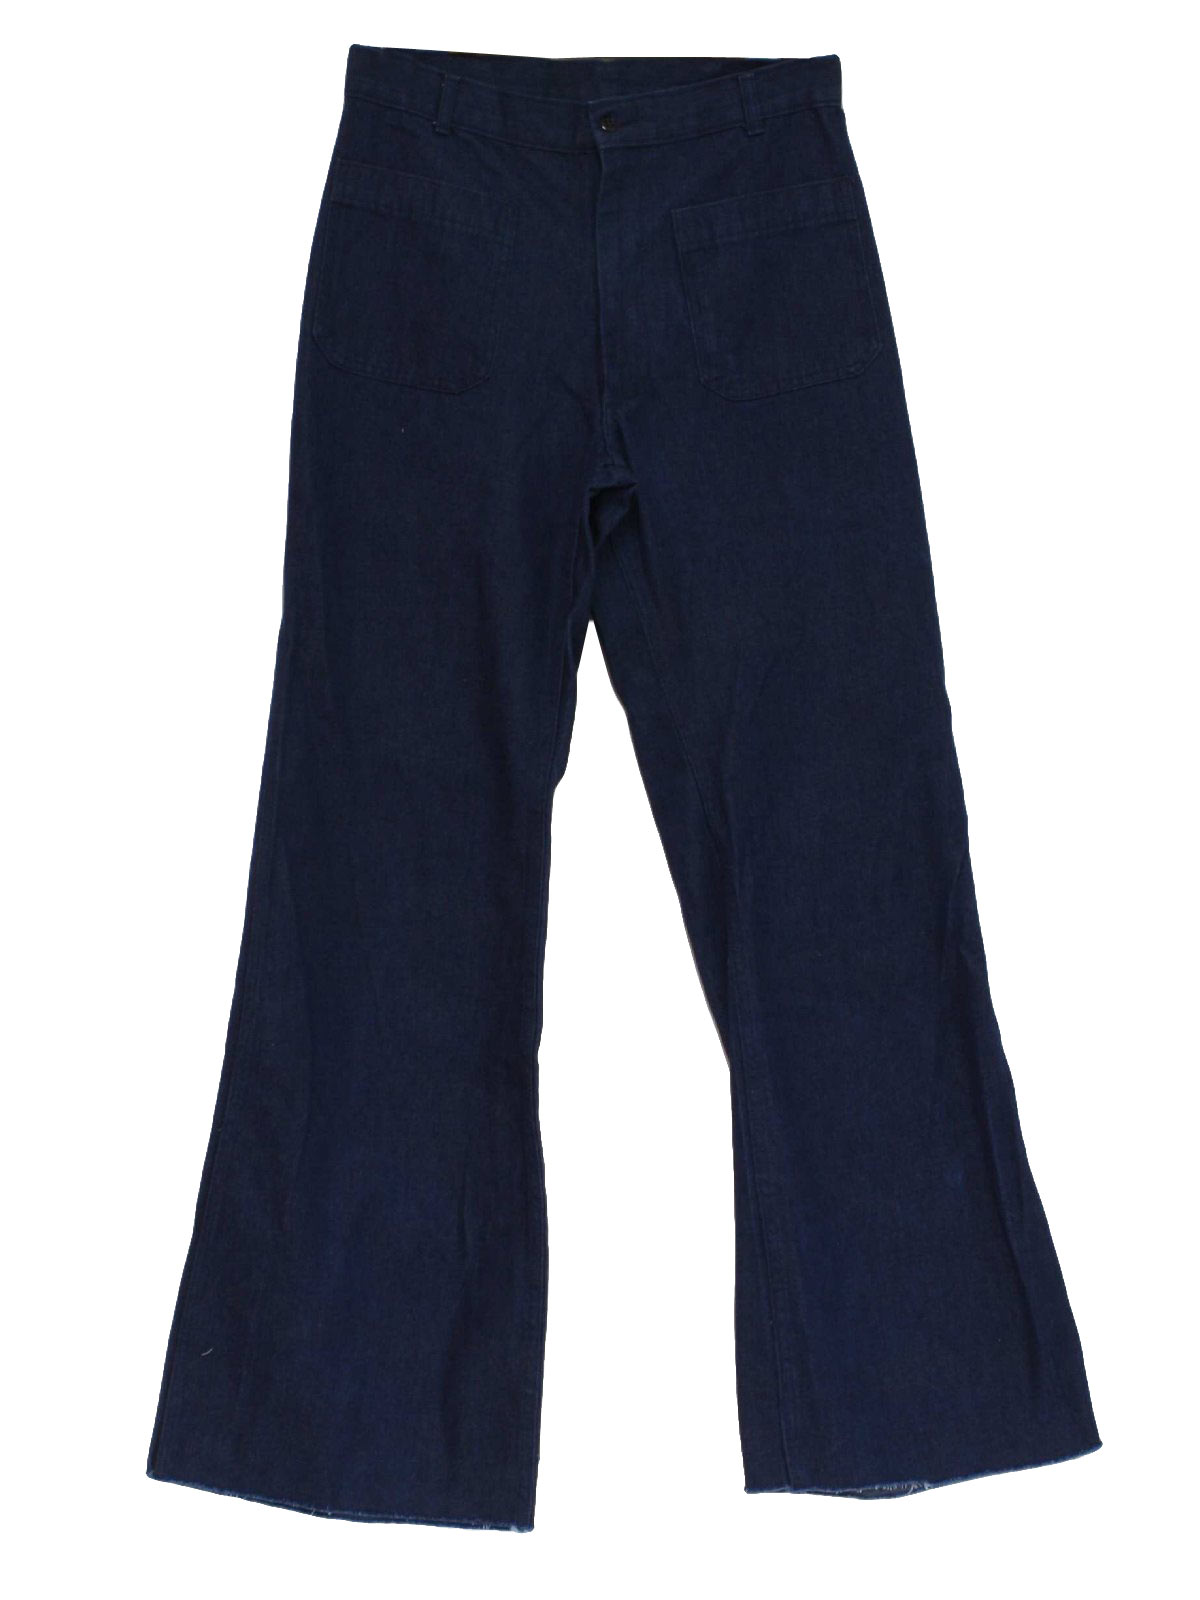 Retro 1970s Bellbottom Pants: 70s -Coastal Industries- Mens dark blue ...